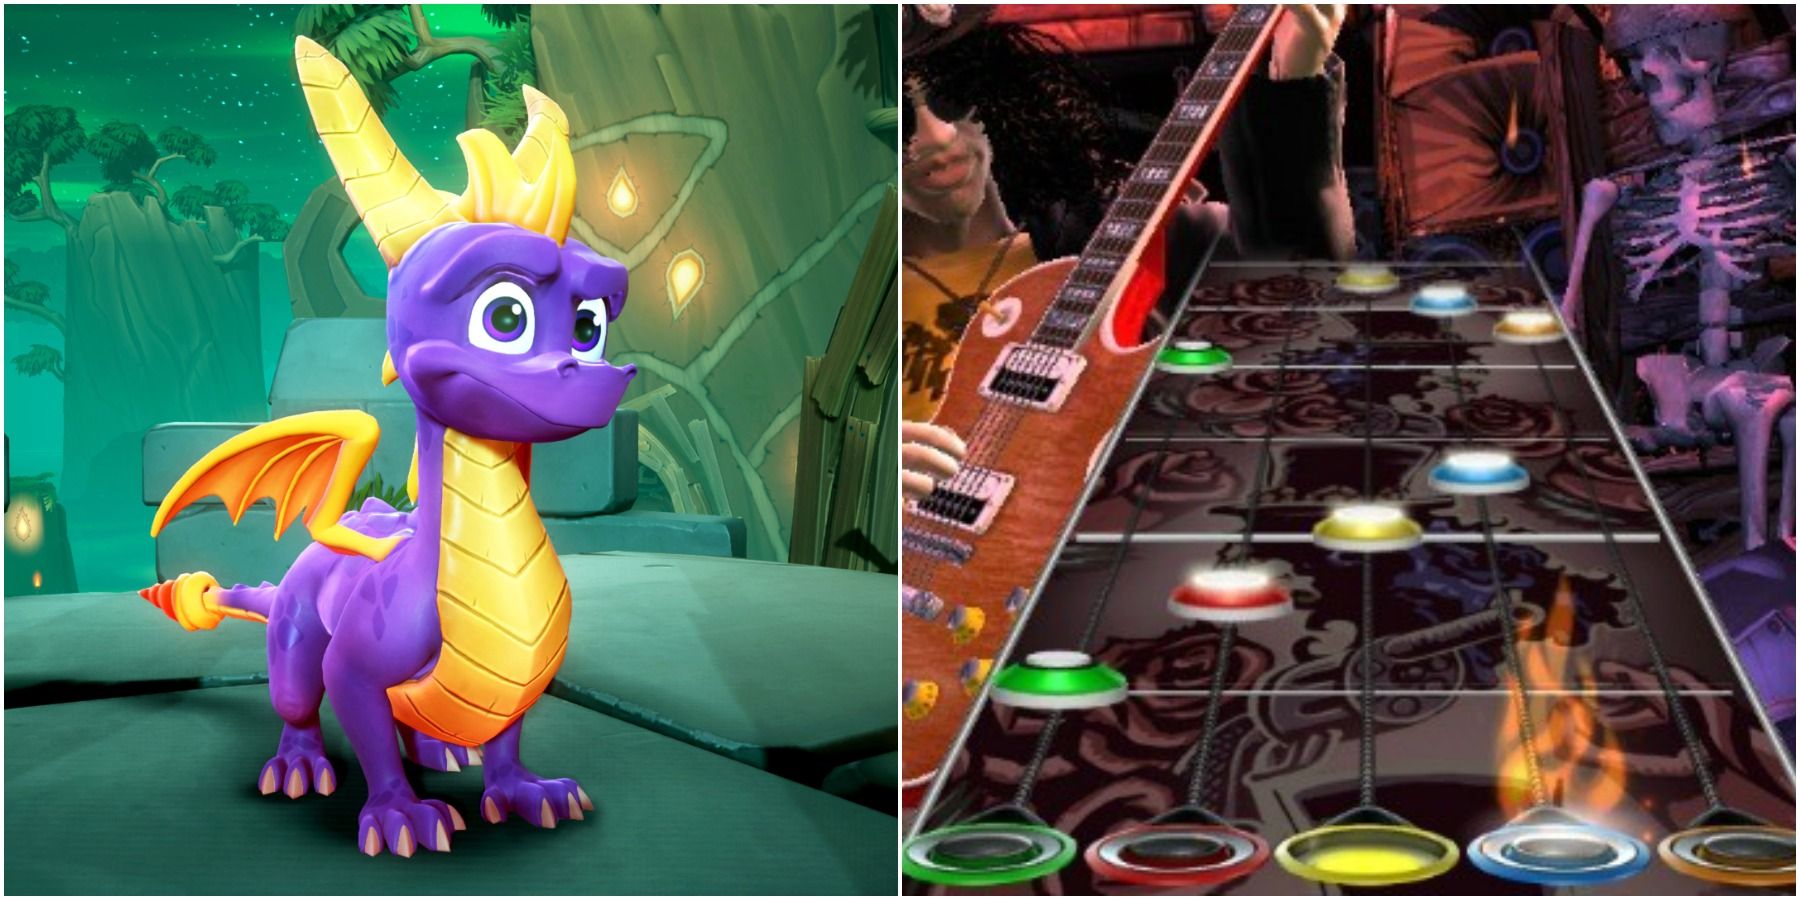 (Left) Spyro smiling (Right) Guitar Hero gameplay